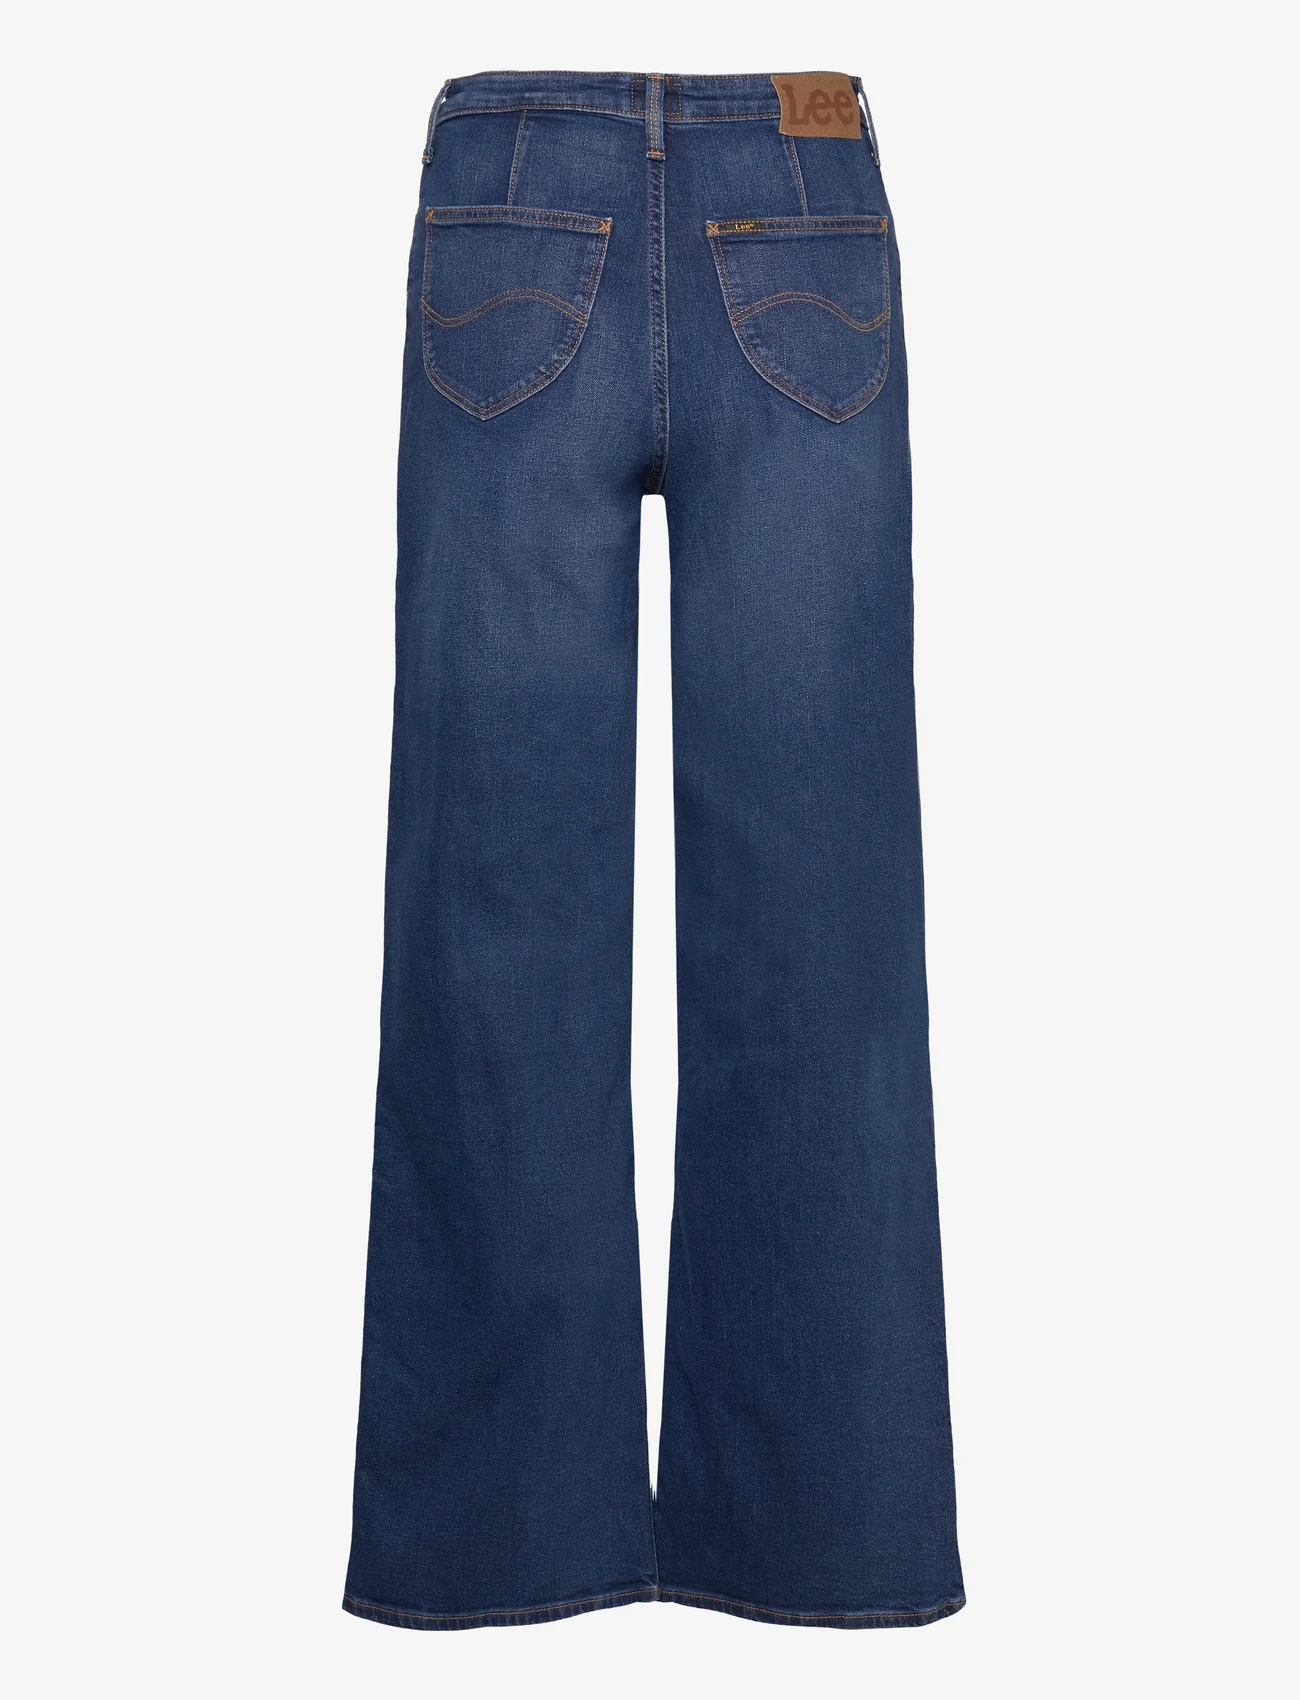 Lee Jeans - STELLA A LINE - mid blue used - 1